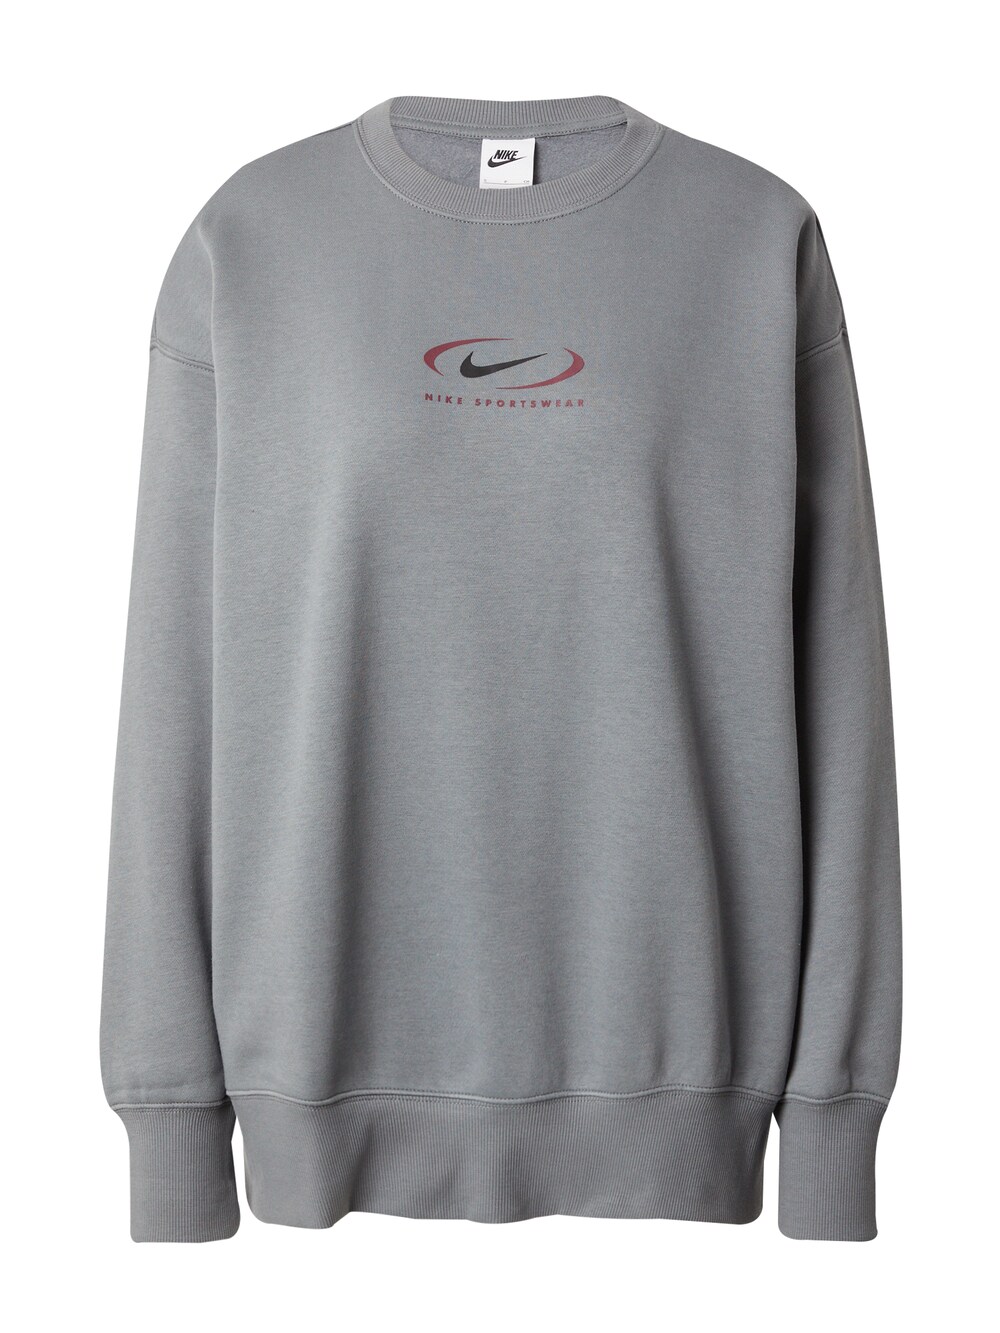 Толстовка Nike Sportswear Swoosh, пестрый серый